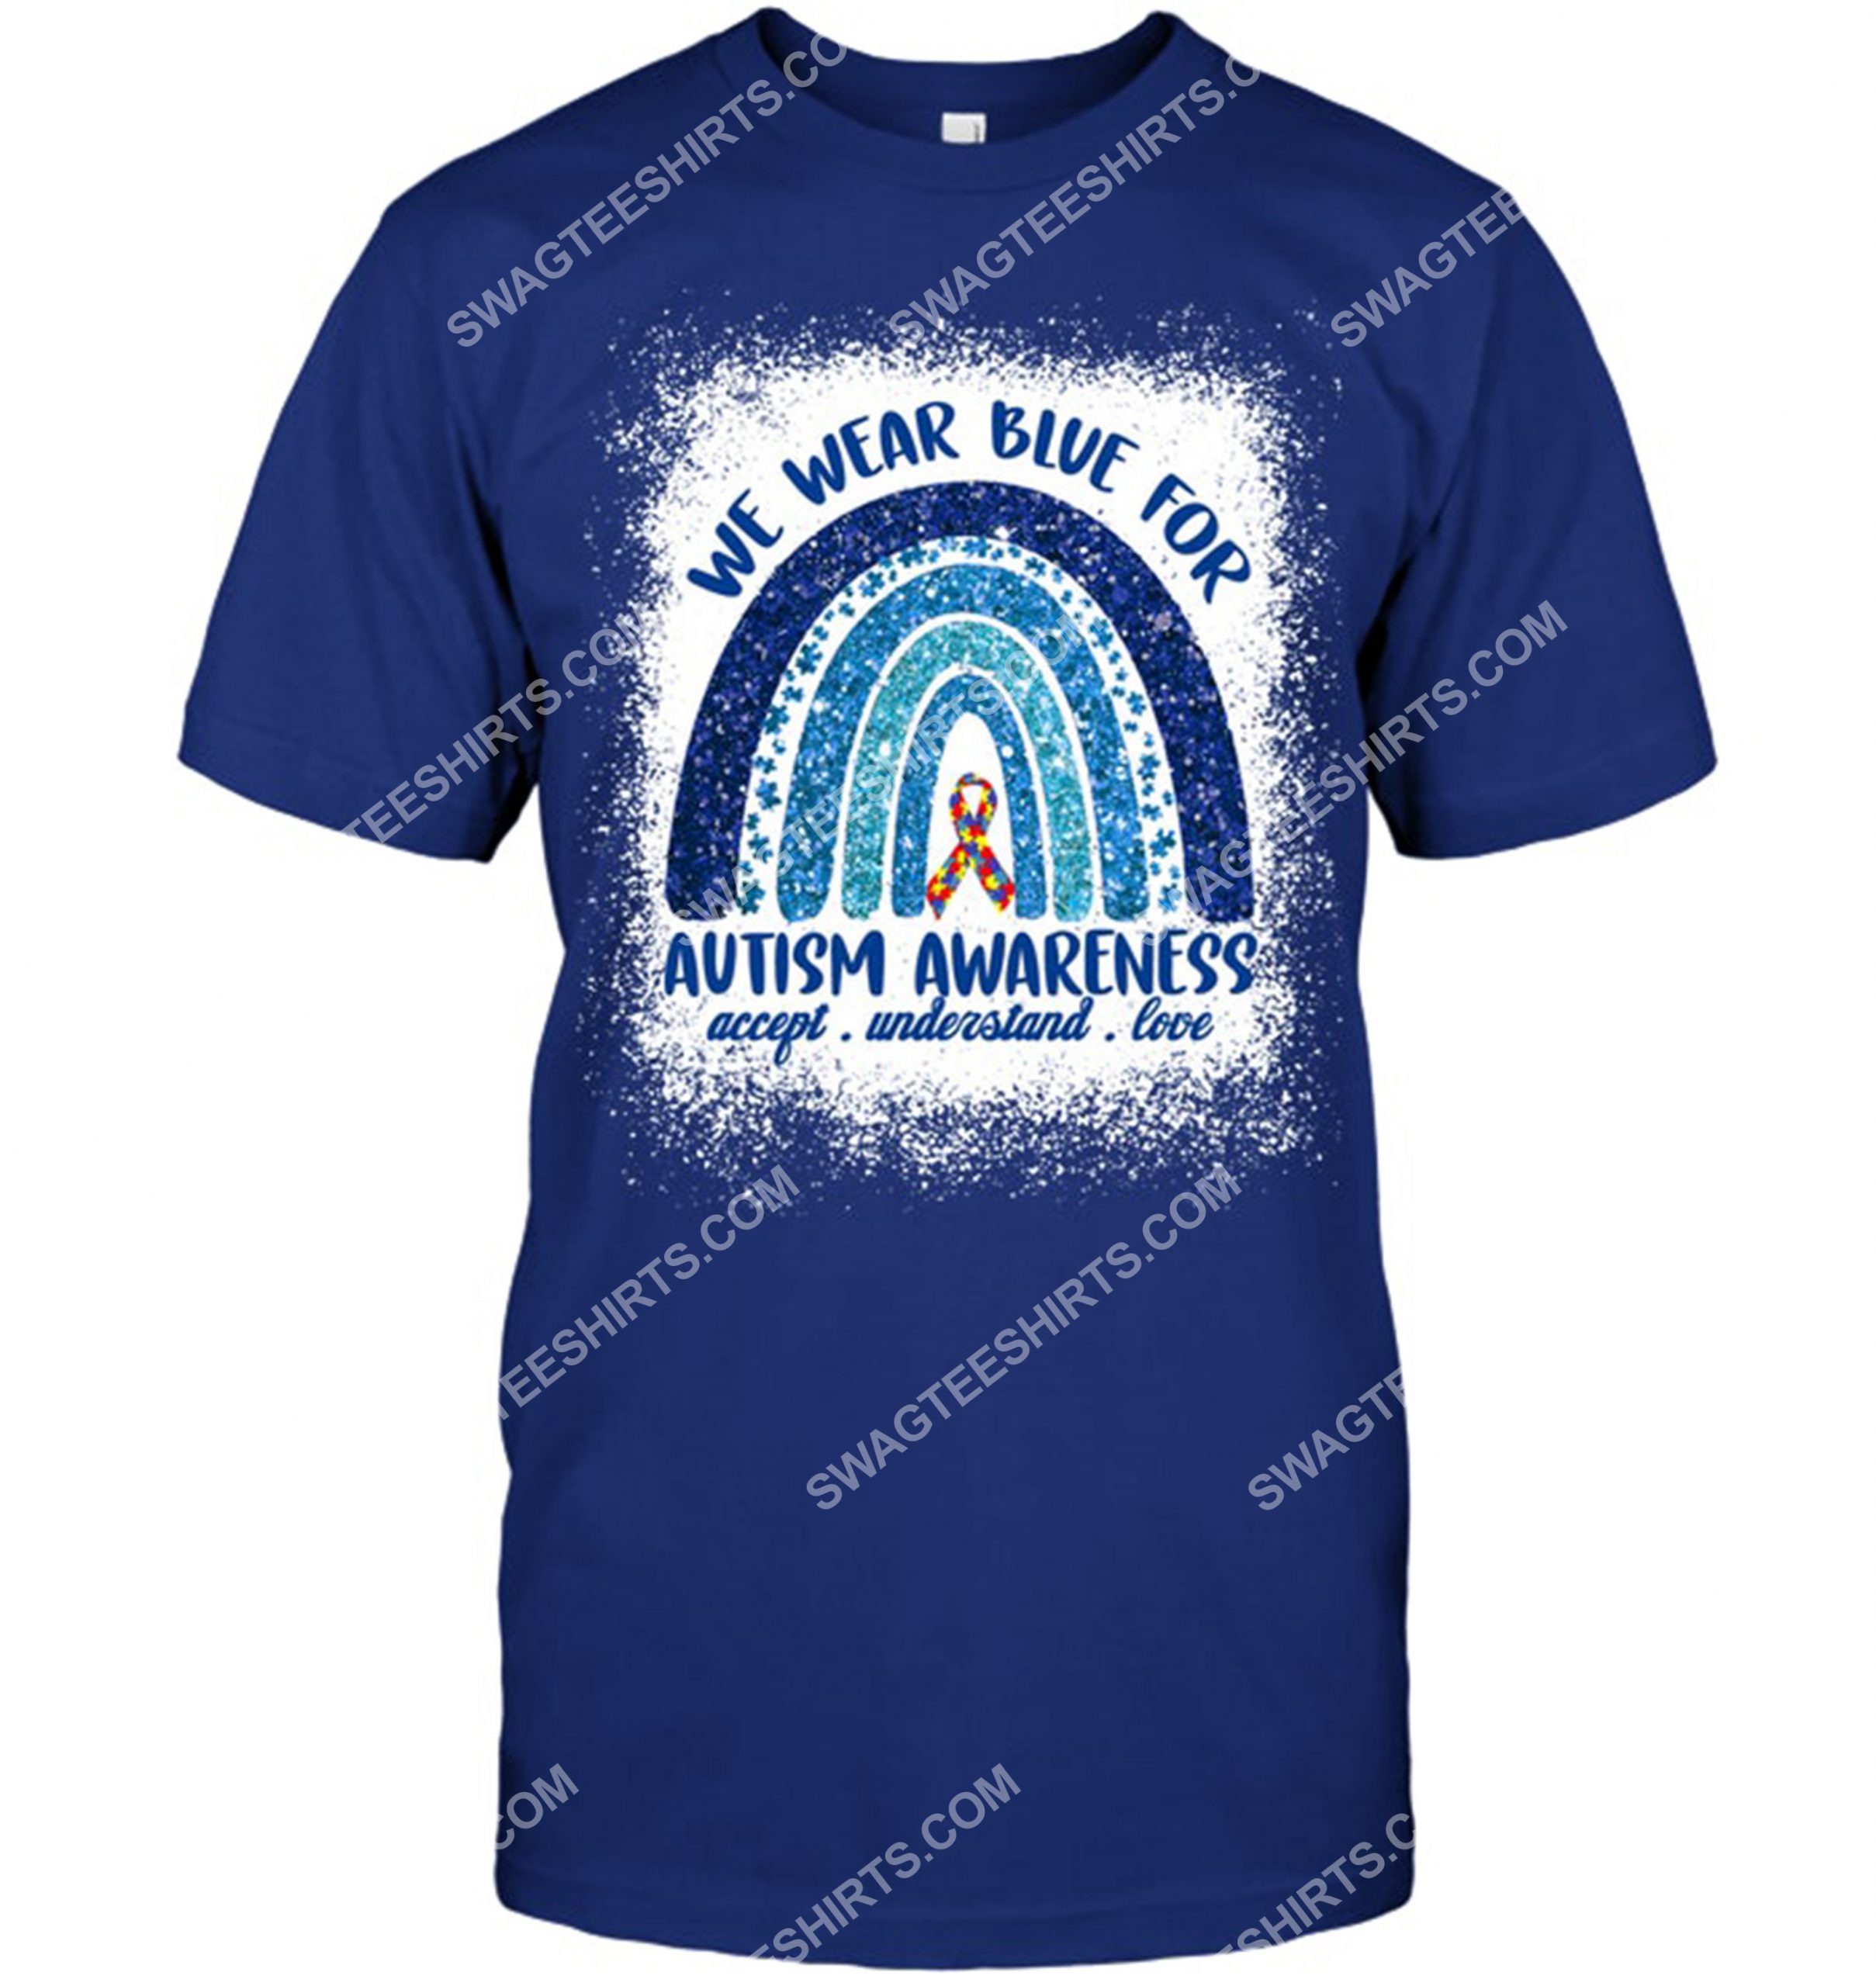 we wear blue for autism awareness accept understand love shirt 1(1) - Copy